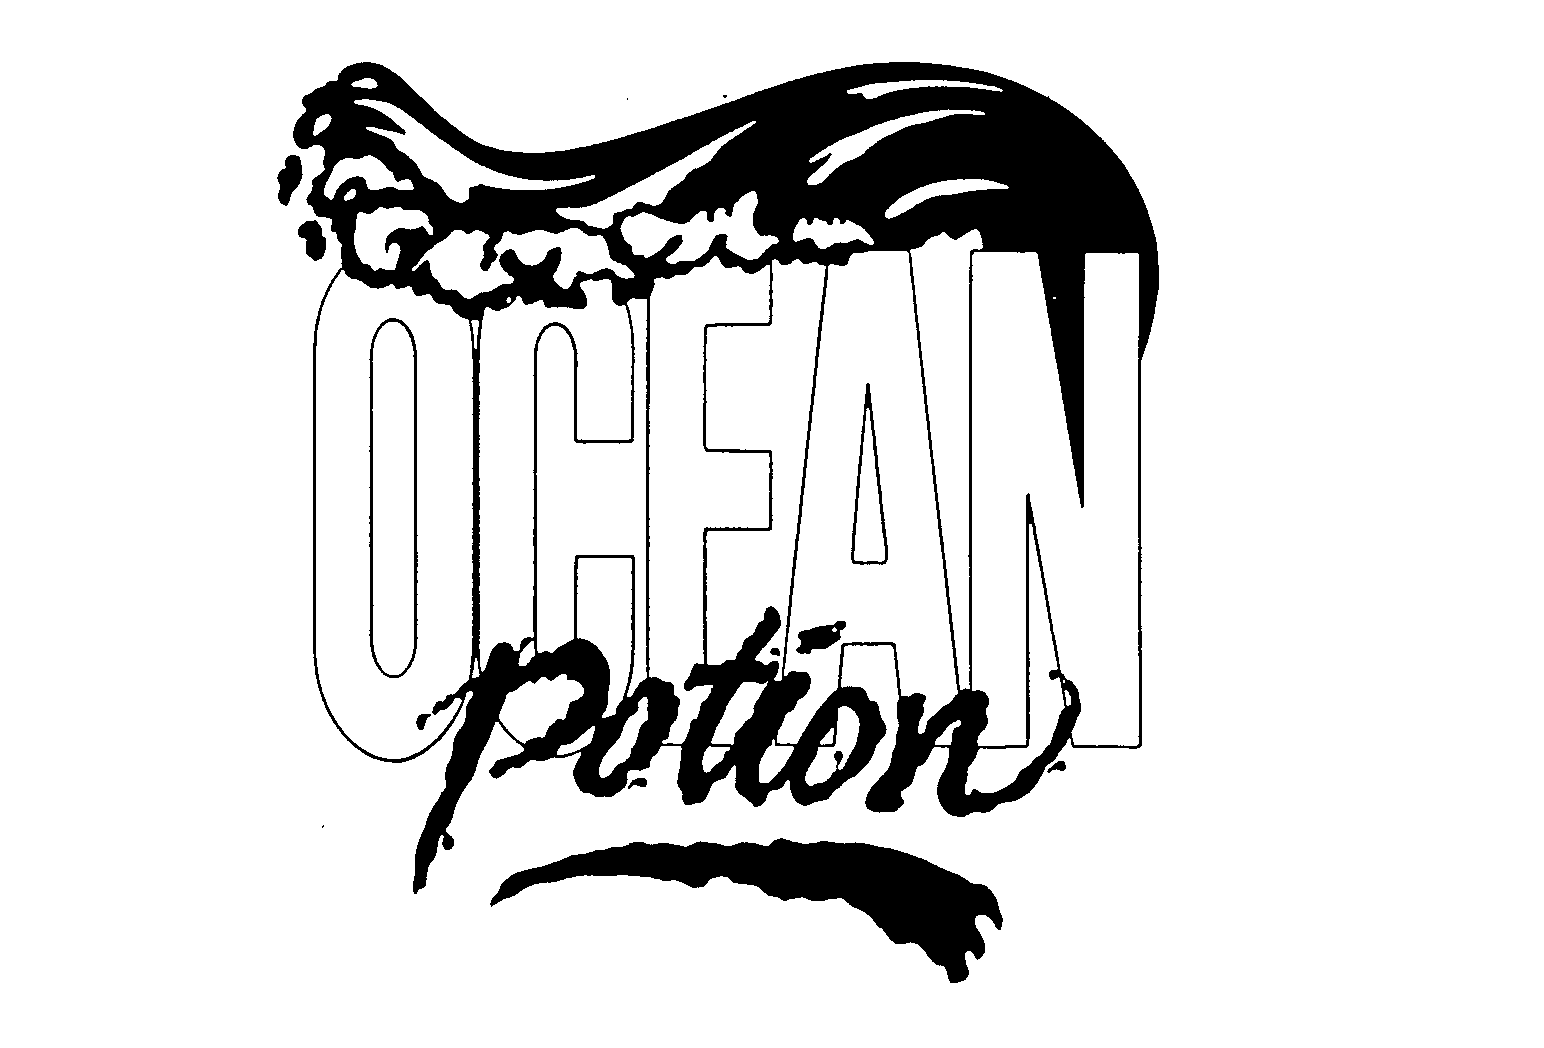 OCEAN POTION